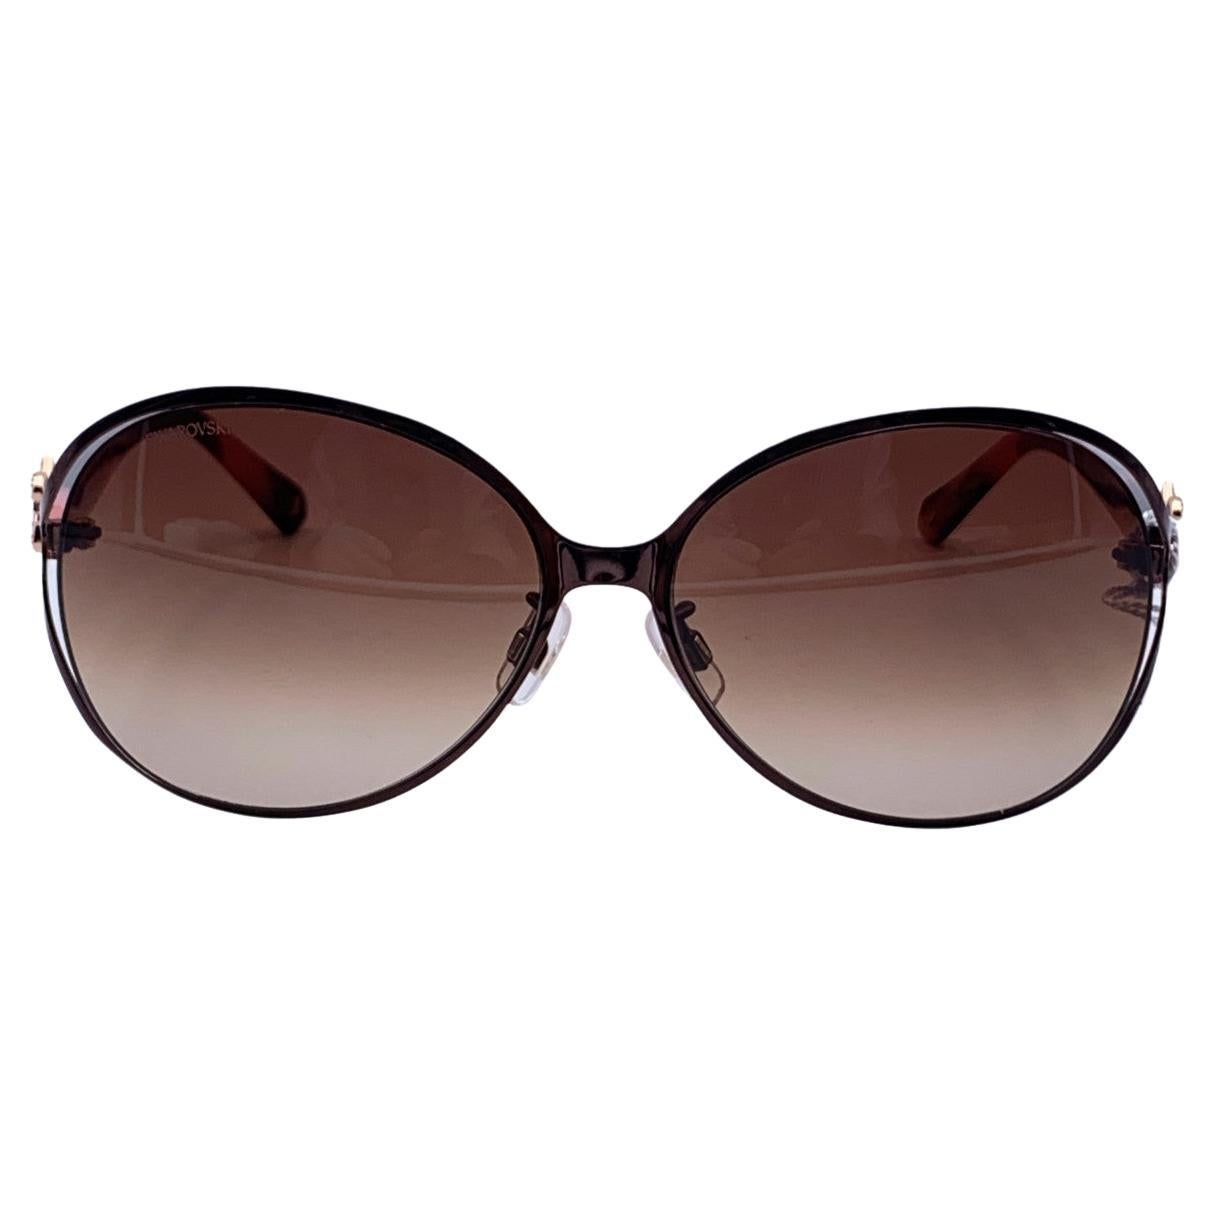 Swarovski Brown Metal Sunglasses SK 241-K with Crystals 60/15 140mm